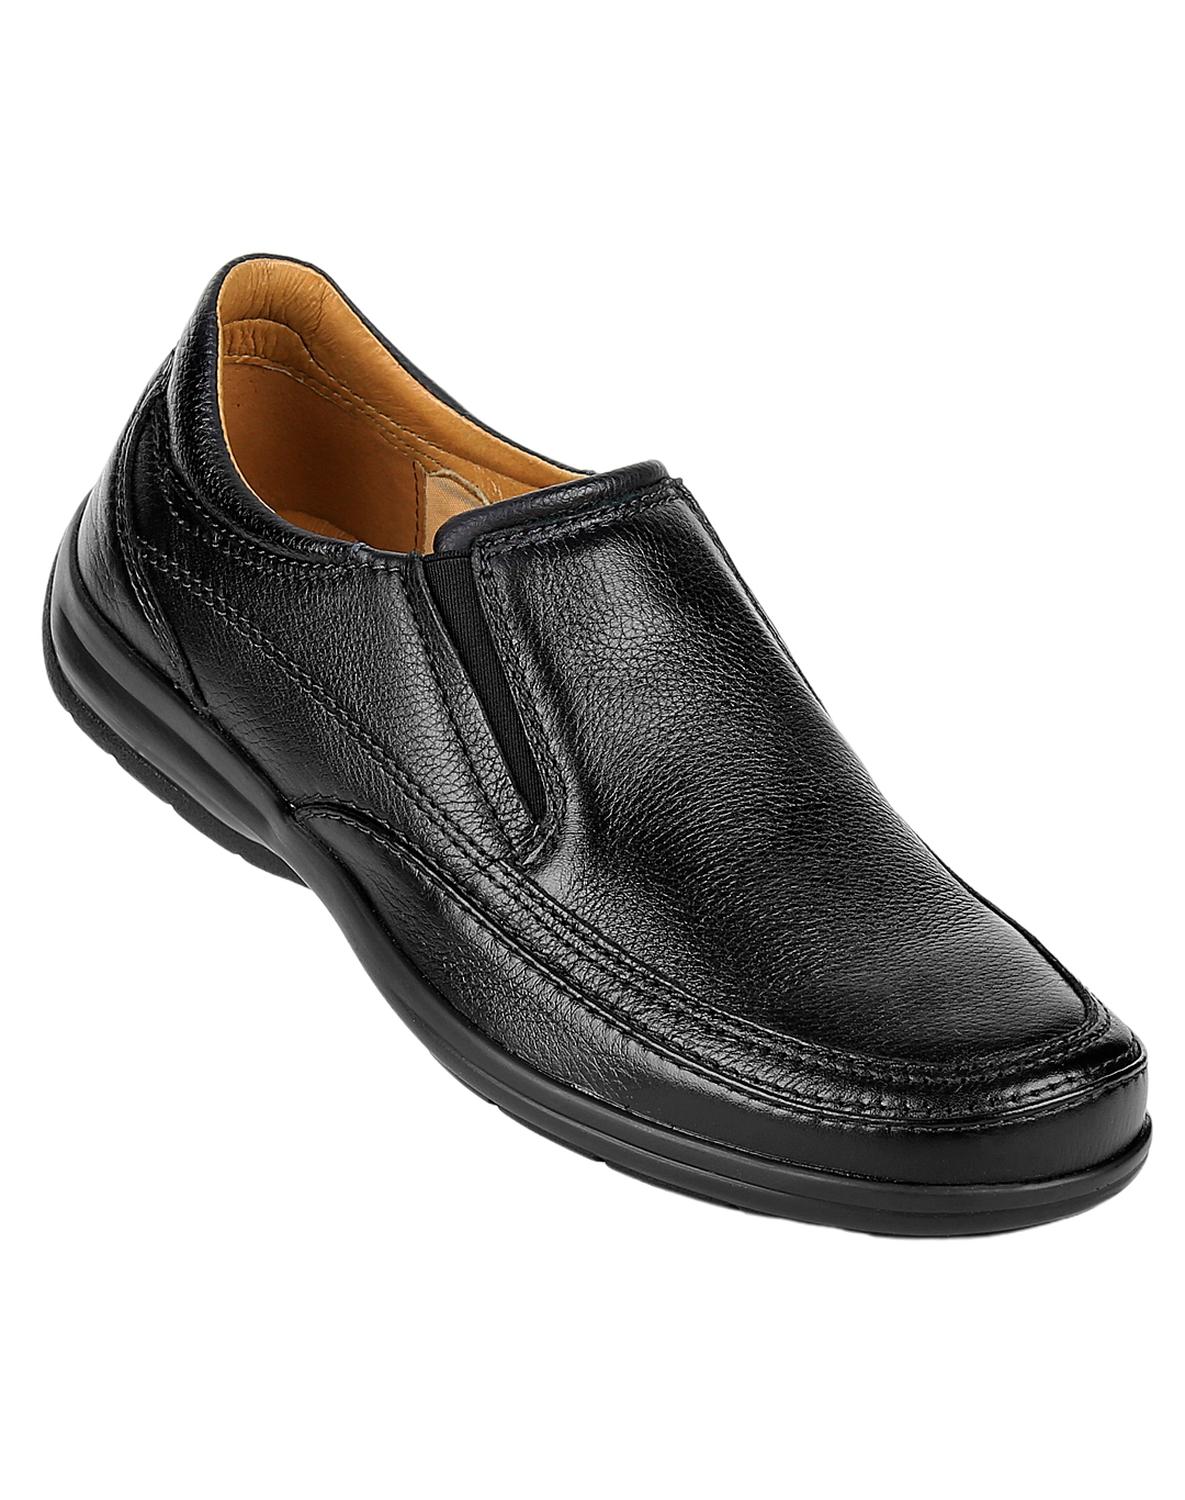 Zapato Casual Hombre Flexi Negro 02501672 Piel